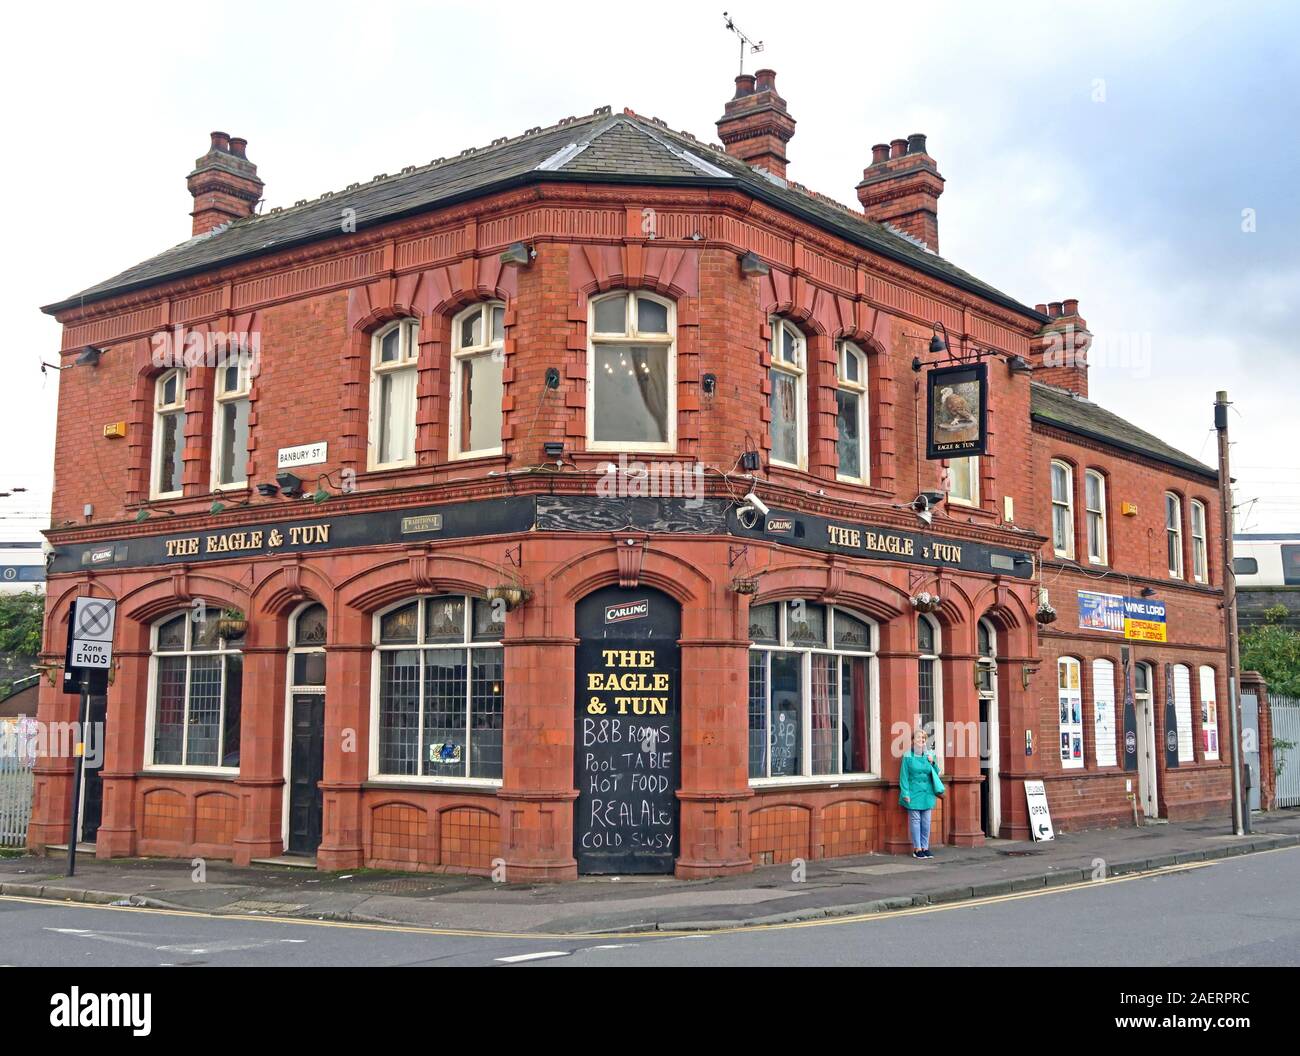 The eagle and Tun,pub,UB40,historic bar,54 New Canal St, Birmingham B5 5RH Stock Photo